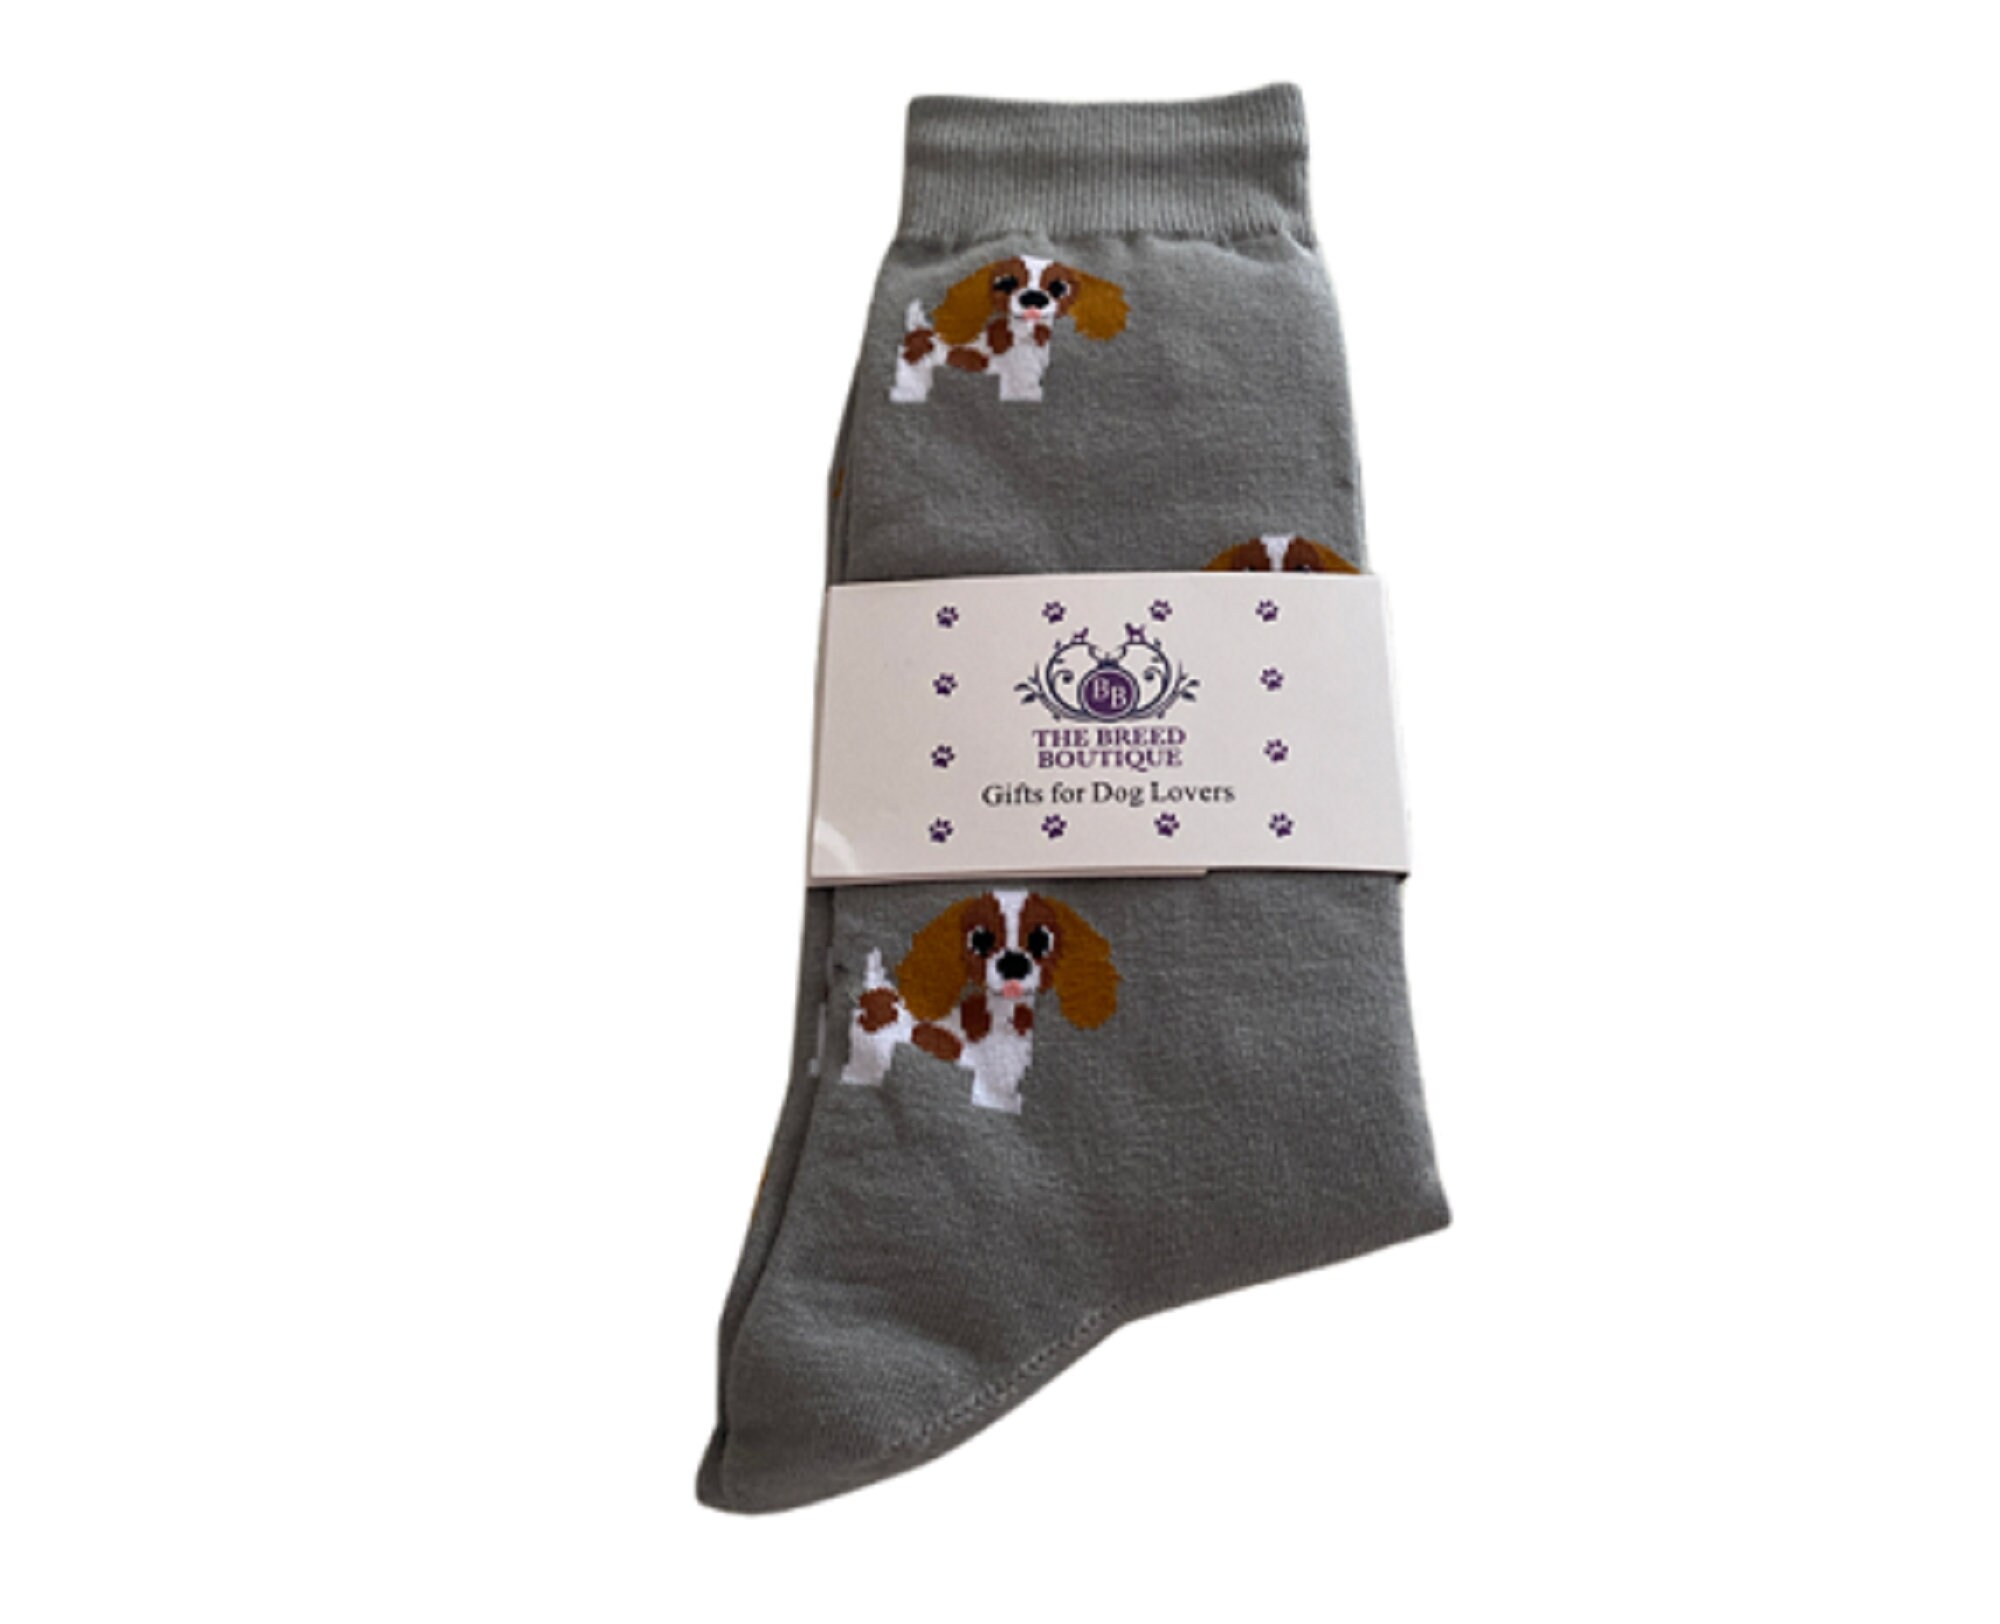 Blenheim Cavalier King Charles Spaniel Dog Print Unisex Socks One Size UK 5 - 11, Eu 38 46, Us 7.5 12